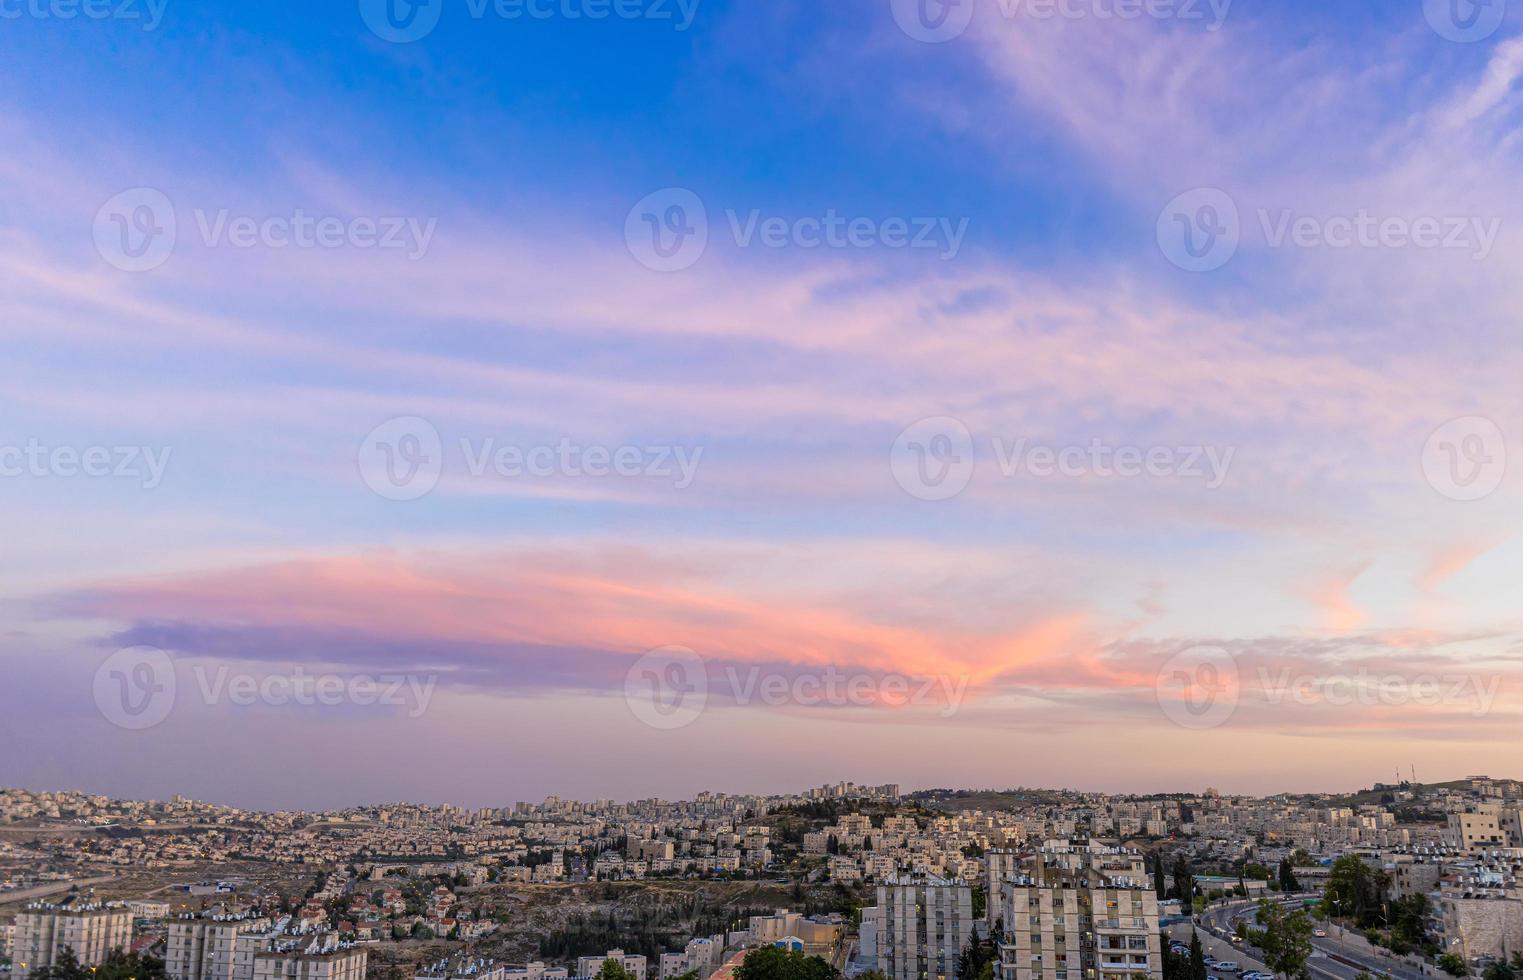 jerusalem neve yaakov insediamento e quartiere a gerusalemme orientale foto